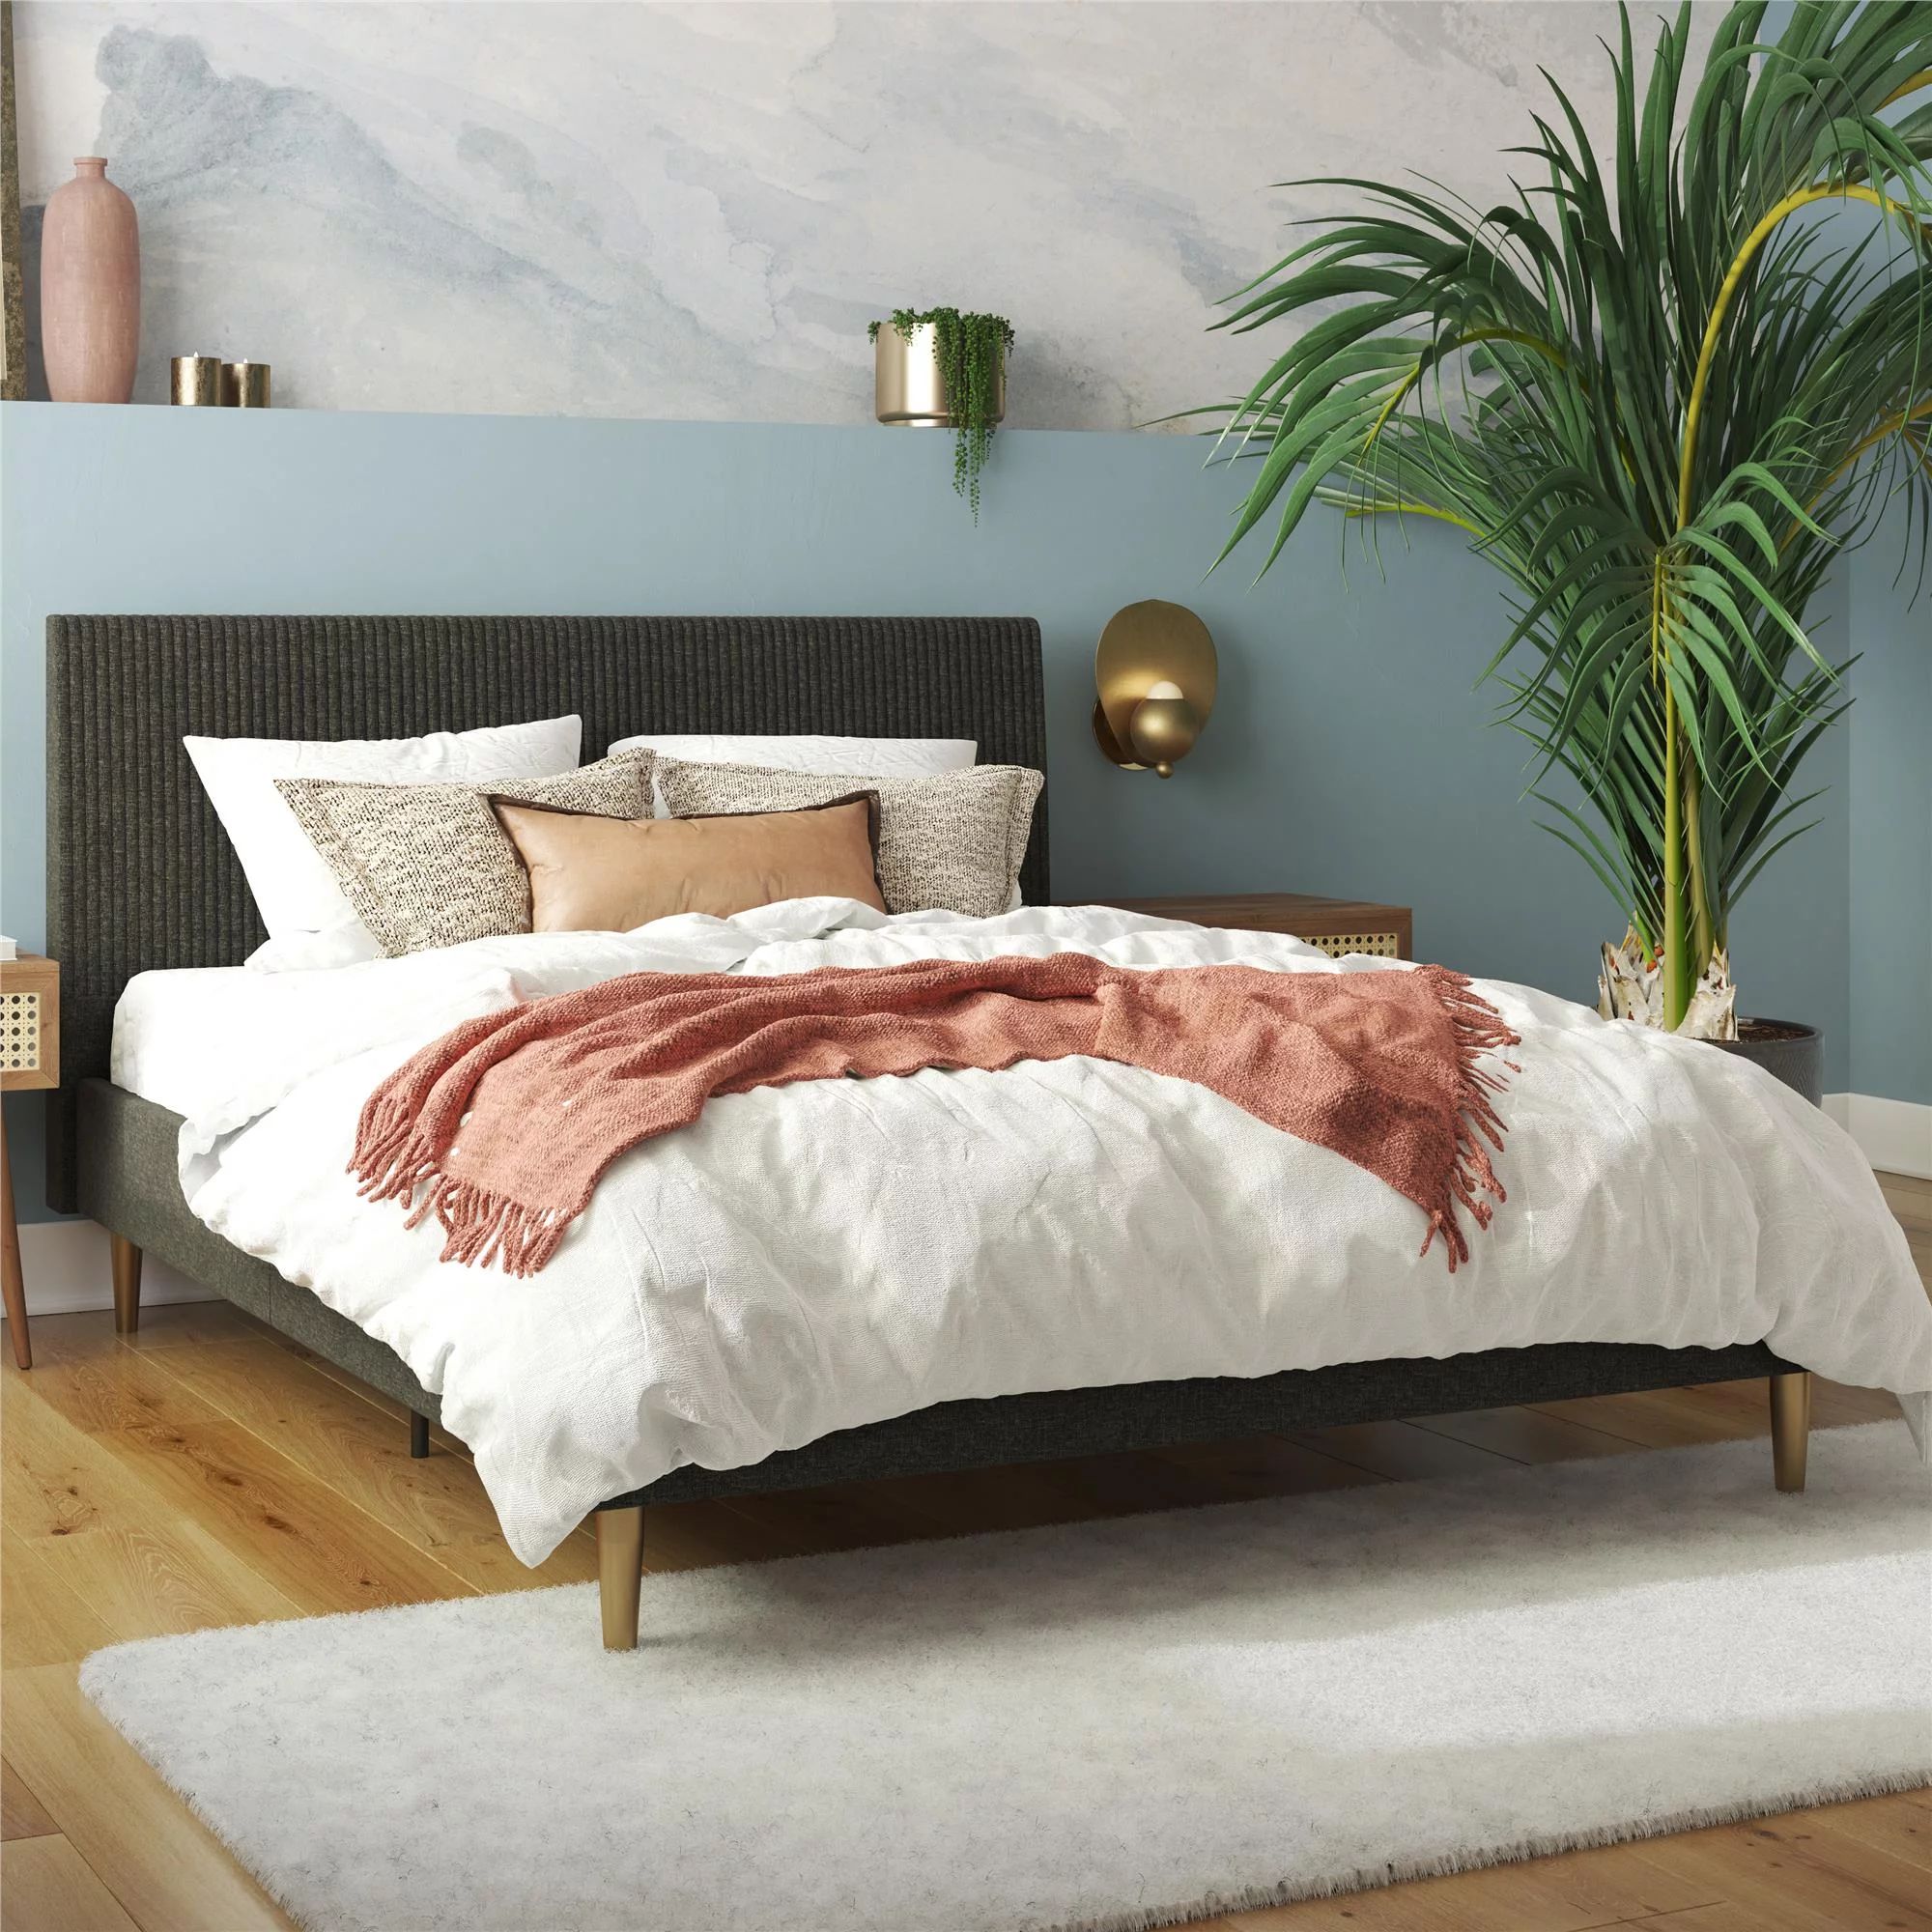 Mr. Kate Daphne Upholstered Bed with Headboard and Modern Platform Frame, Full, Dark Gray Linen | Walmart (US)